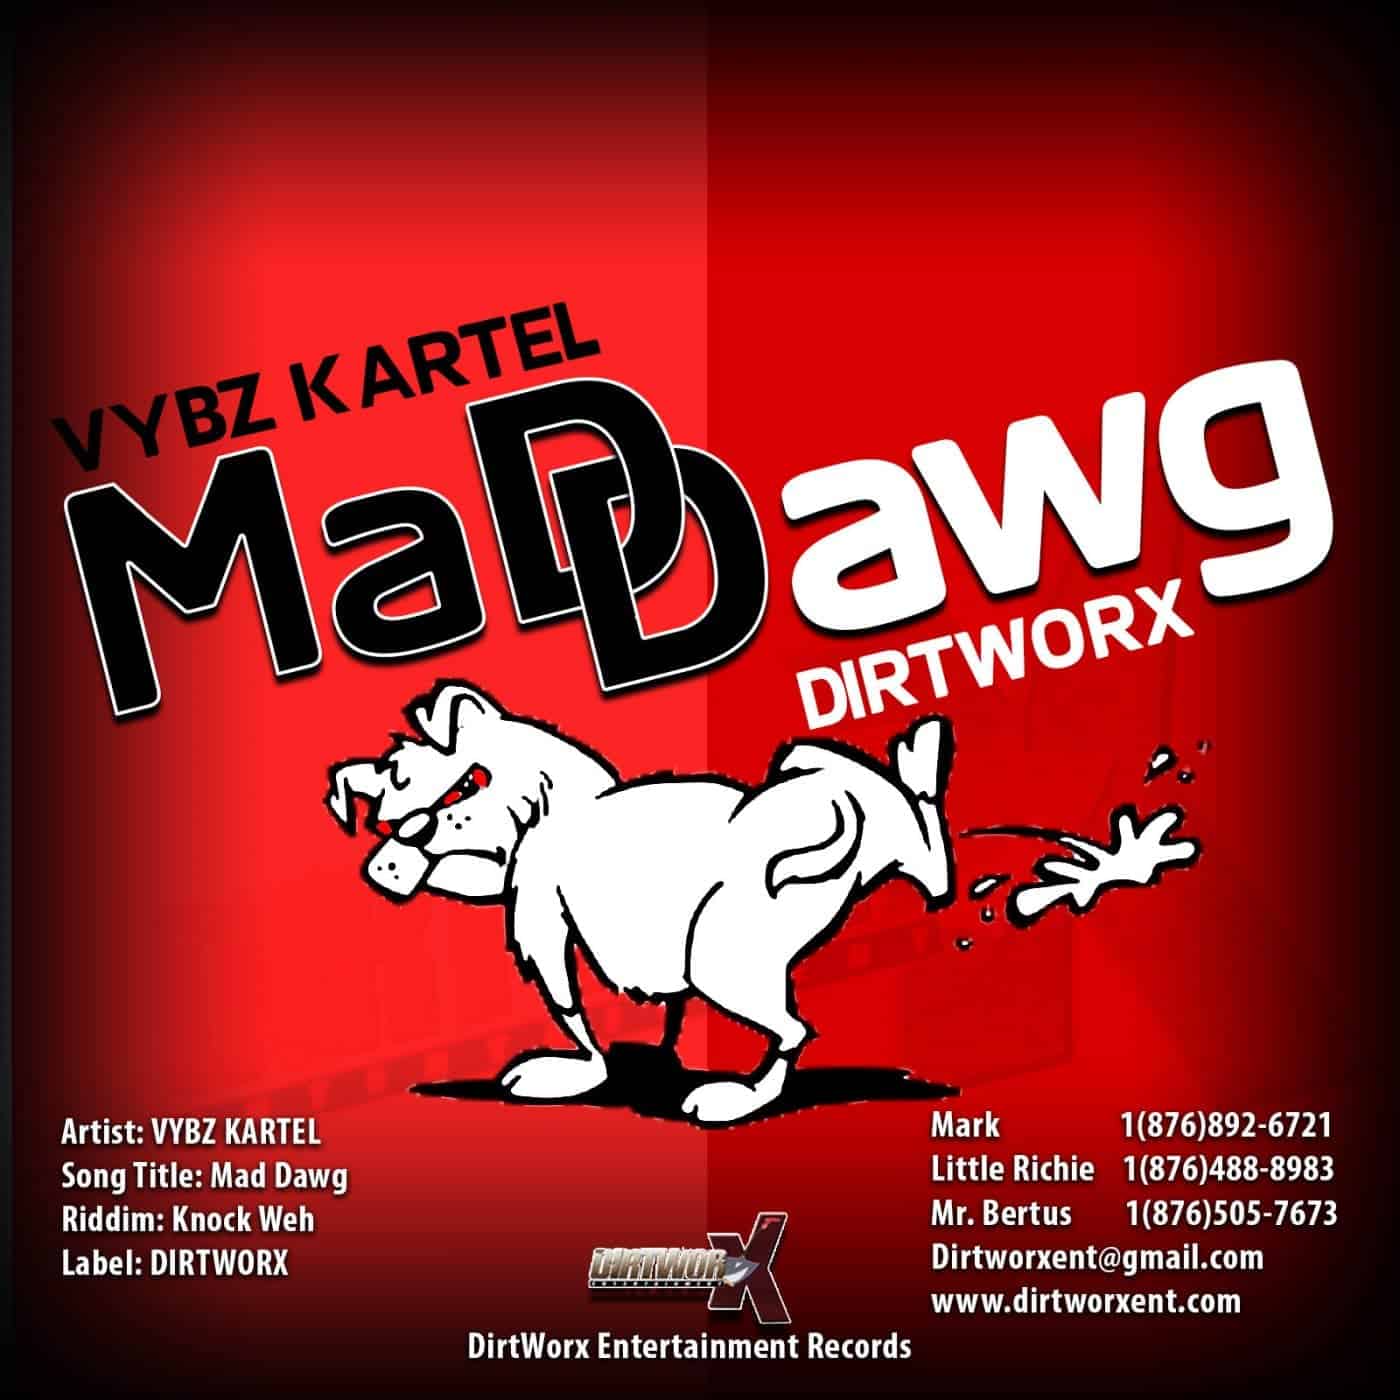 Knock Weh Riddim - 2016 Dancehall ft Vybz Kartel - "Madd Dawg" - Dirtworx Entertainment